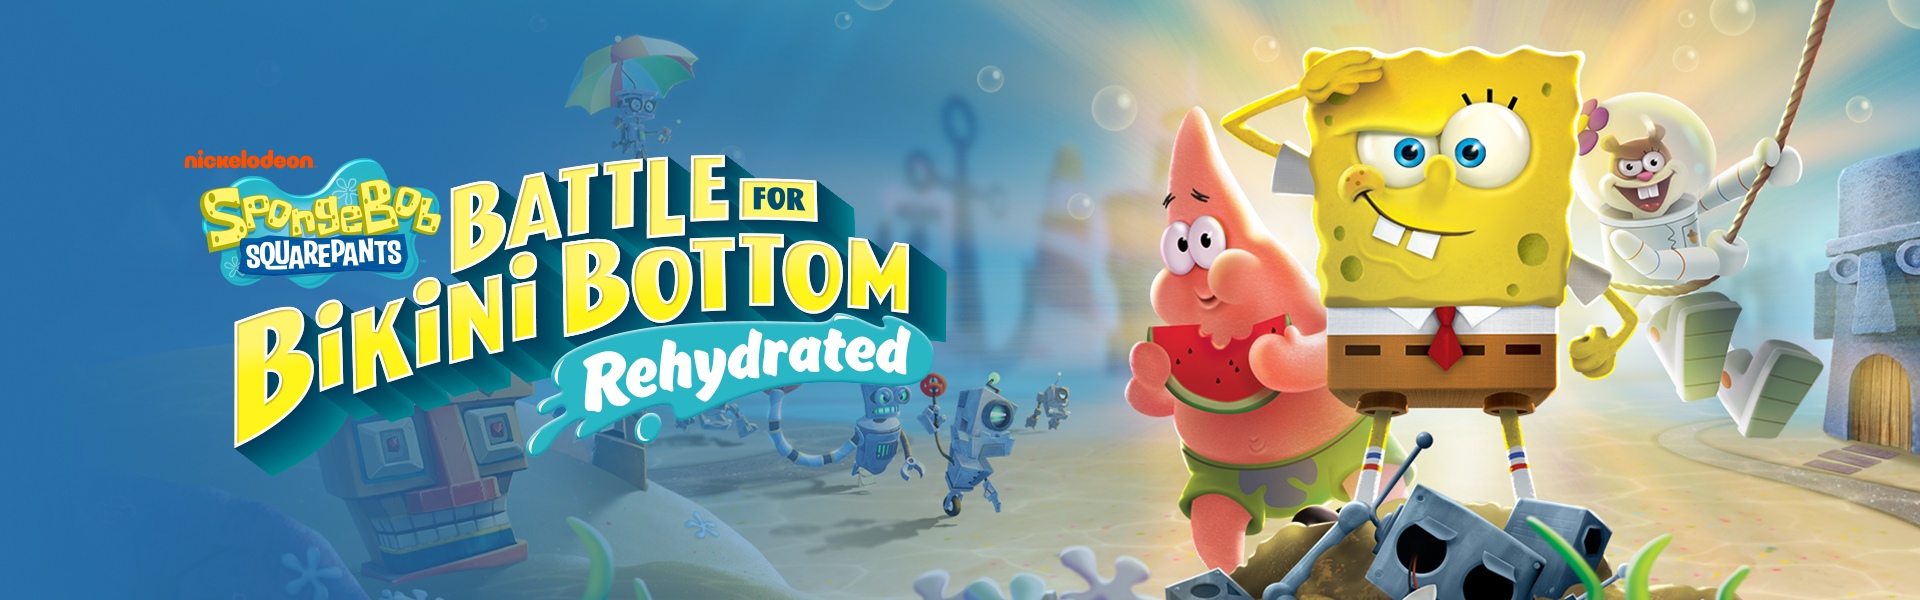 SpongeBob SquarePants: Bikini Rehydrated Nordic | Battle for - THQ Bottom GmbH